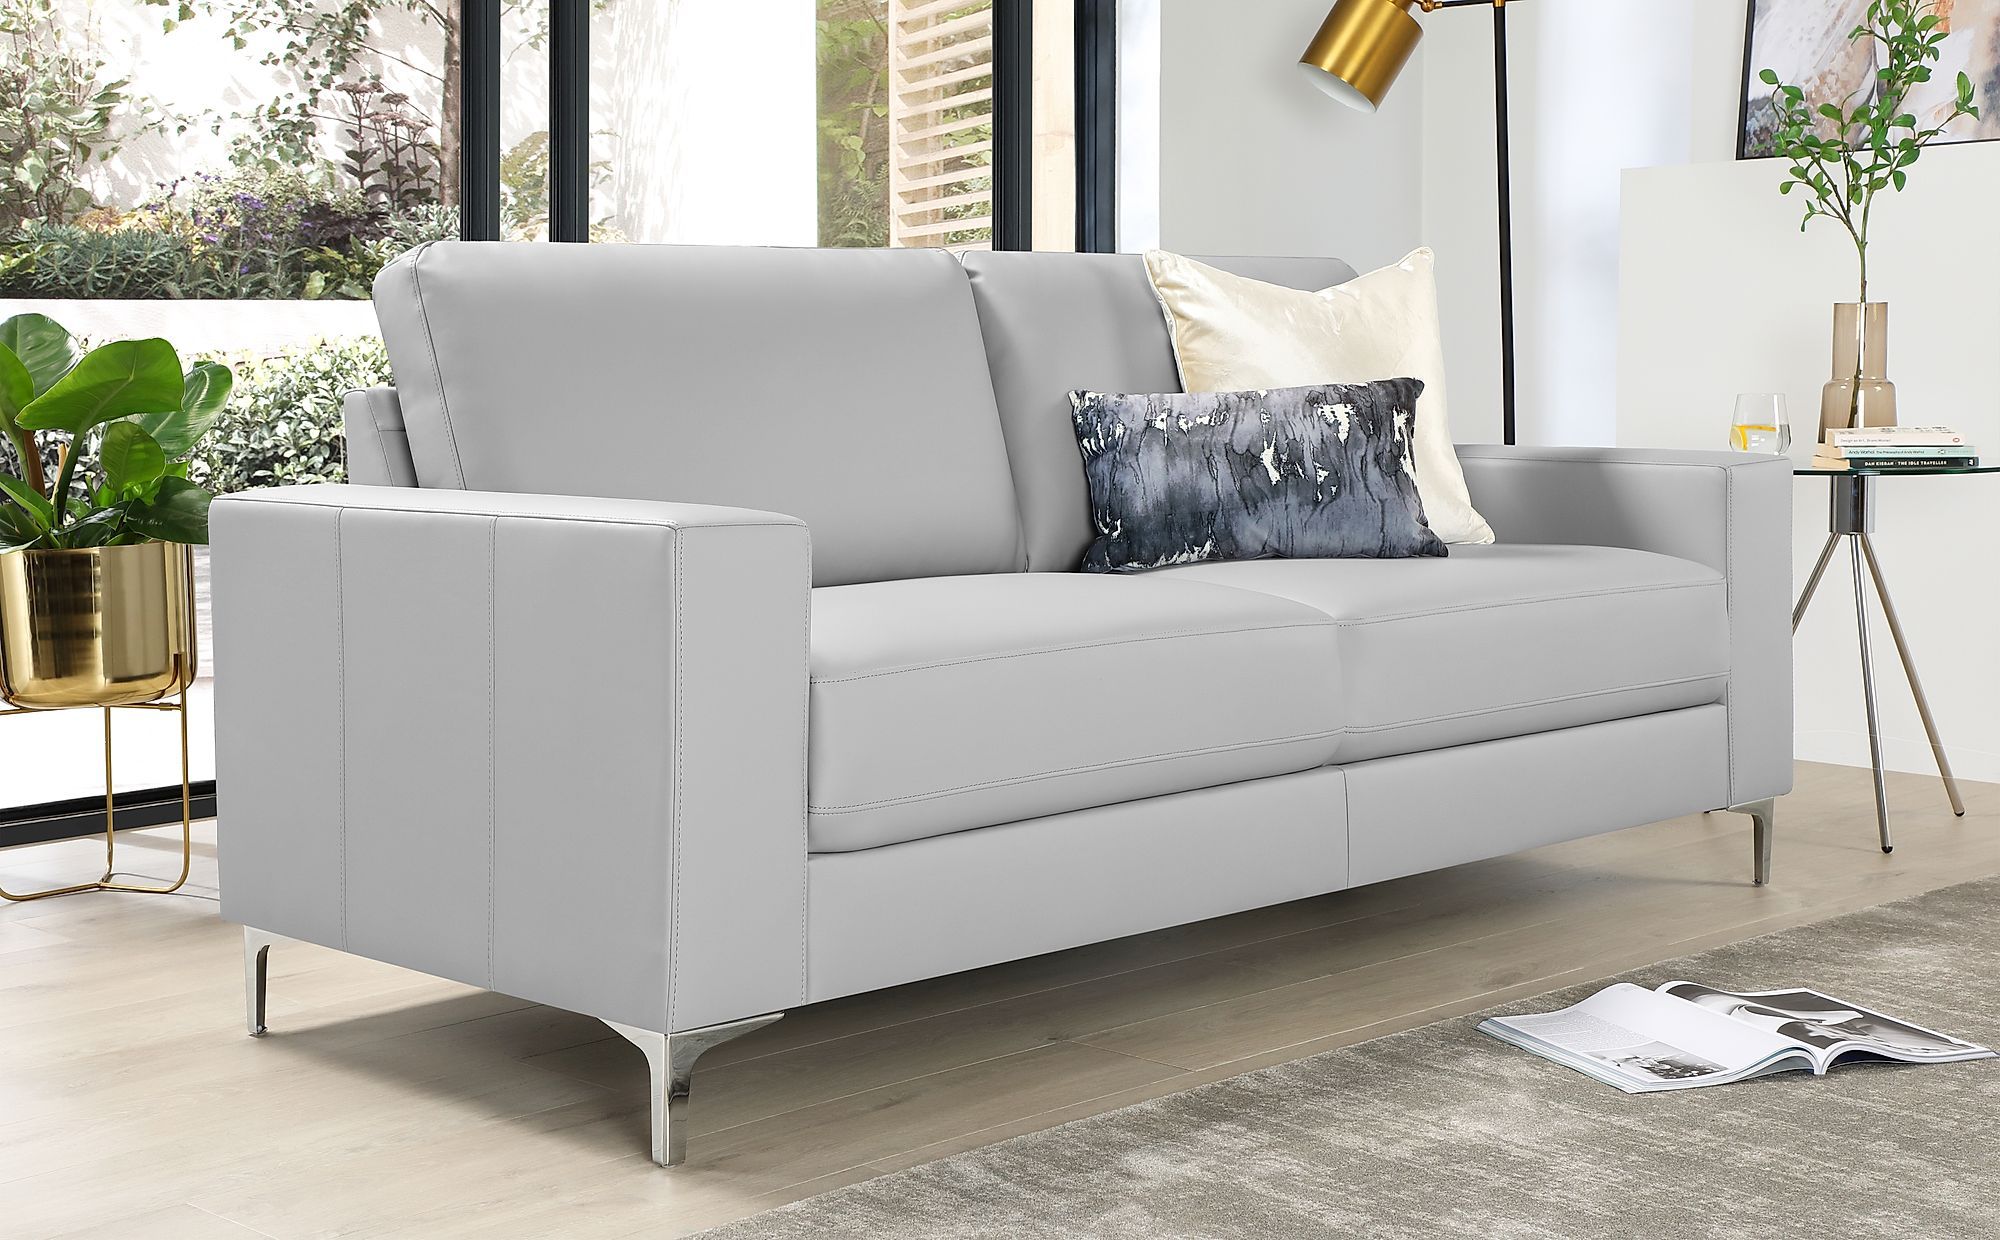 Baltimore Light Grey Leather 3 Seater Sofa | Furniture Choice Throughout Modern Light Grey Loveseat Sofas (Gallery 4 of 20)